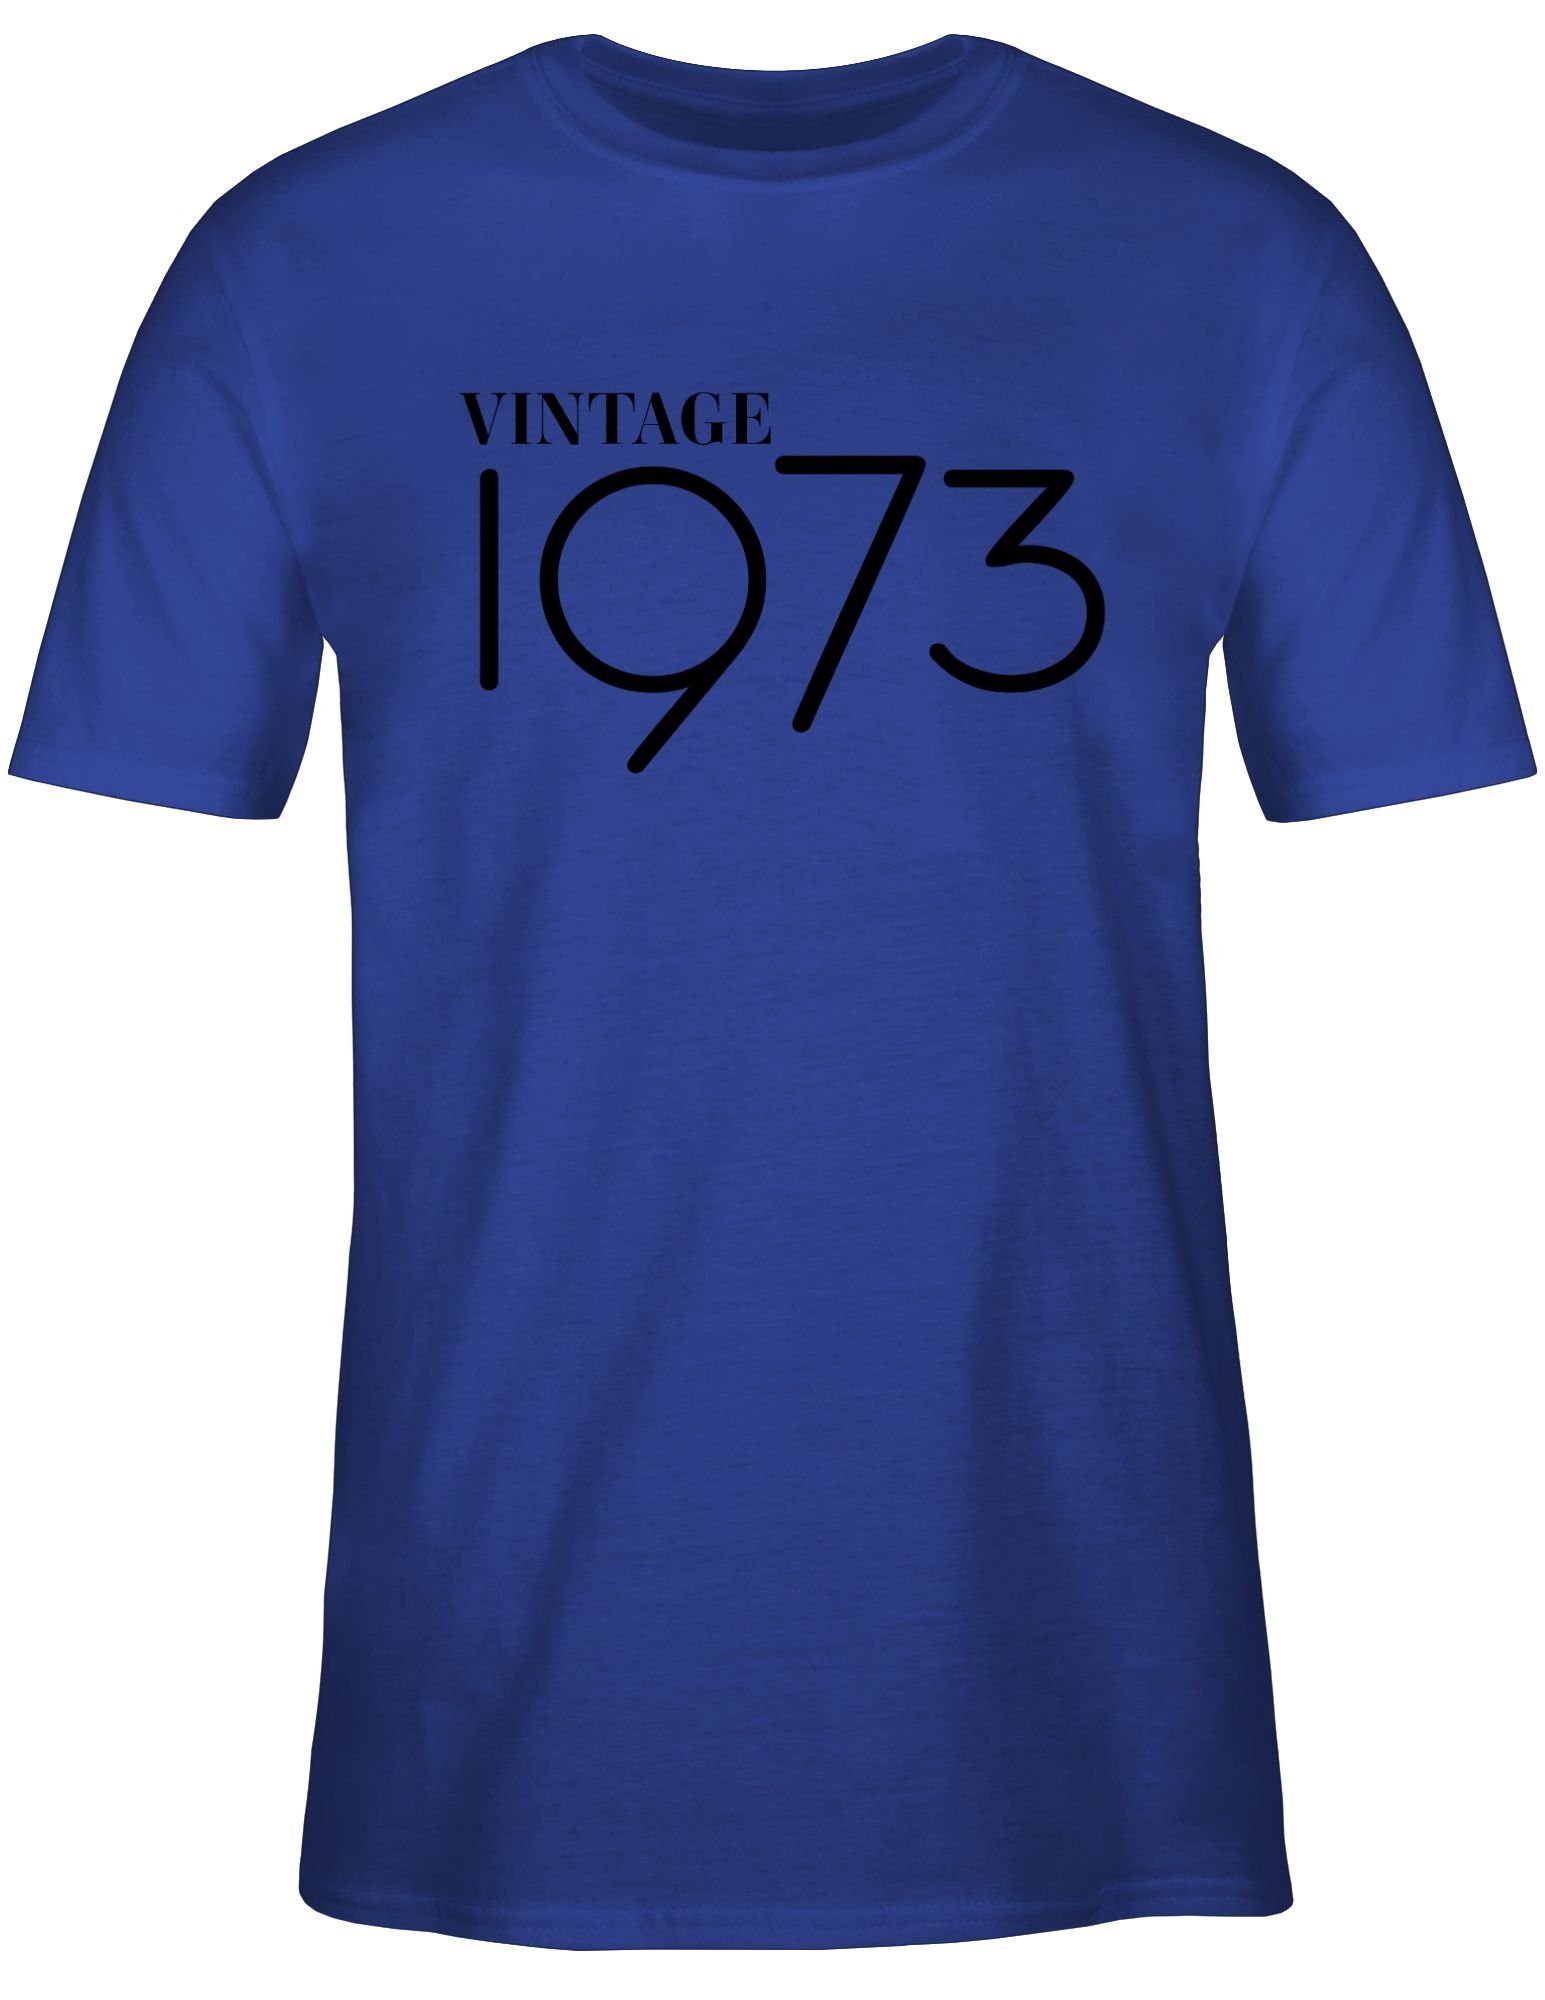 Shirtracer T-Shirt Geburtstag 50. Vintage 1973 3 Royalblau